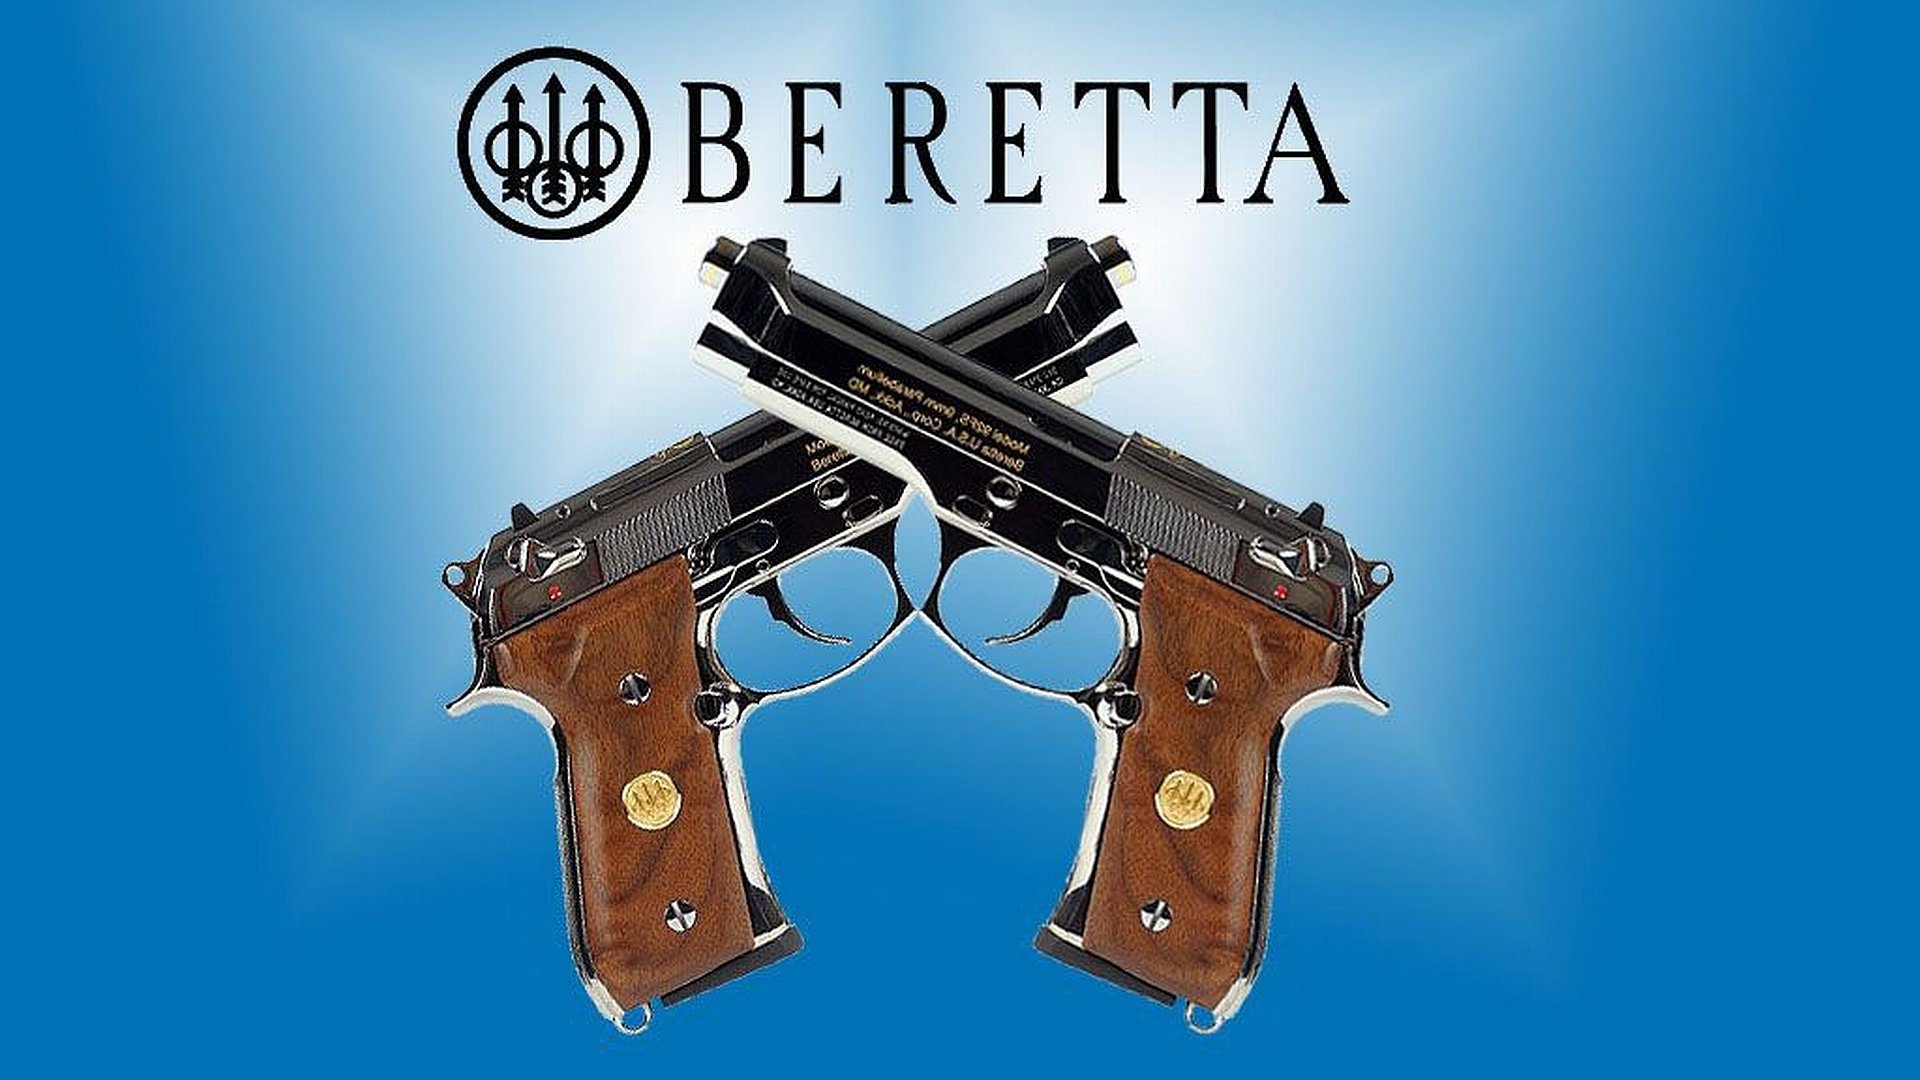 Best Beretta Pistol wallpaper ID:397763 for High Resolution full hd 1080p PC